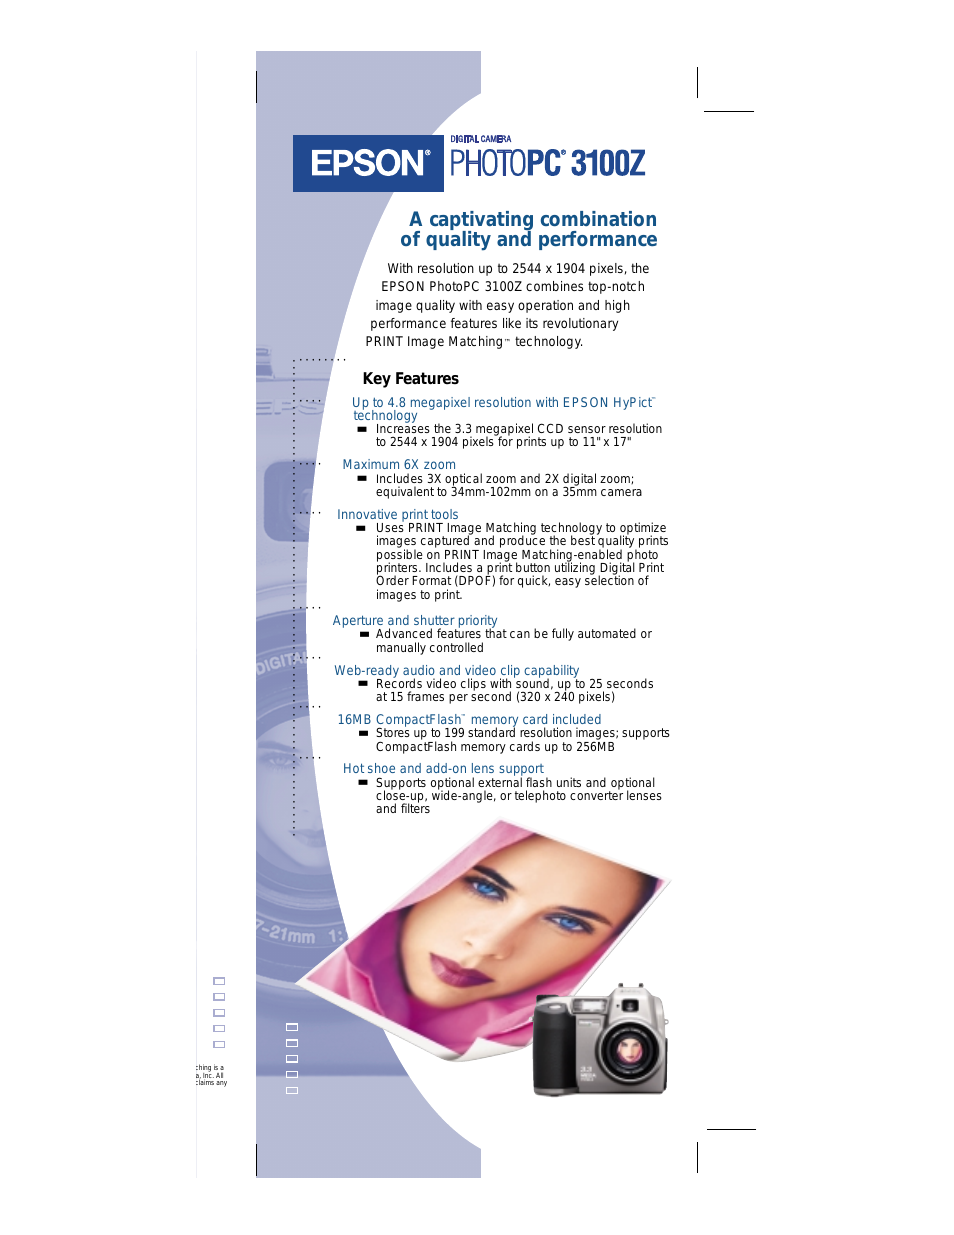 Epson Digital Camera PHOTOPC 3100Z